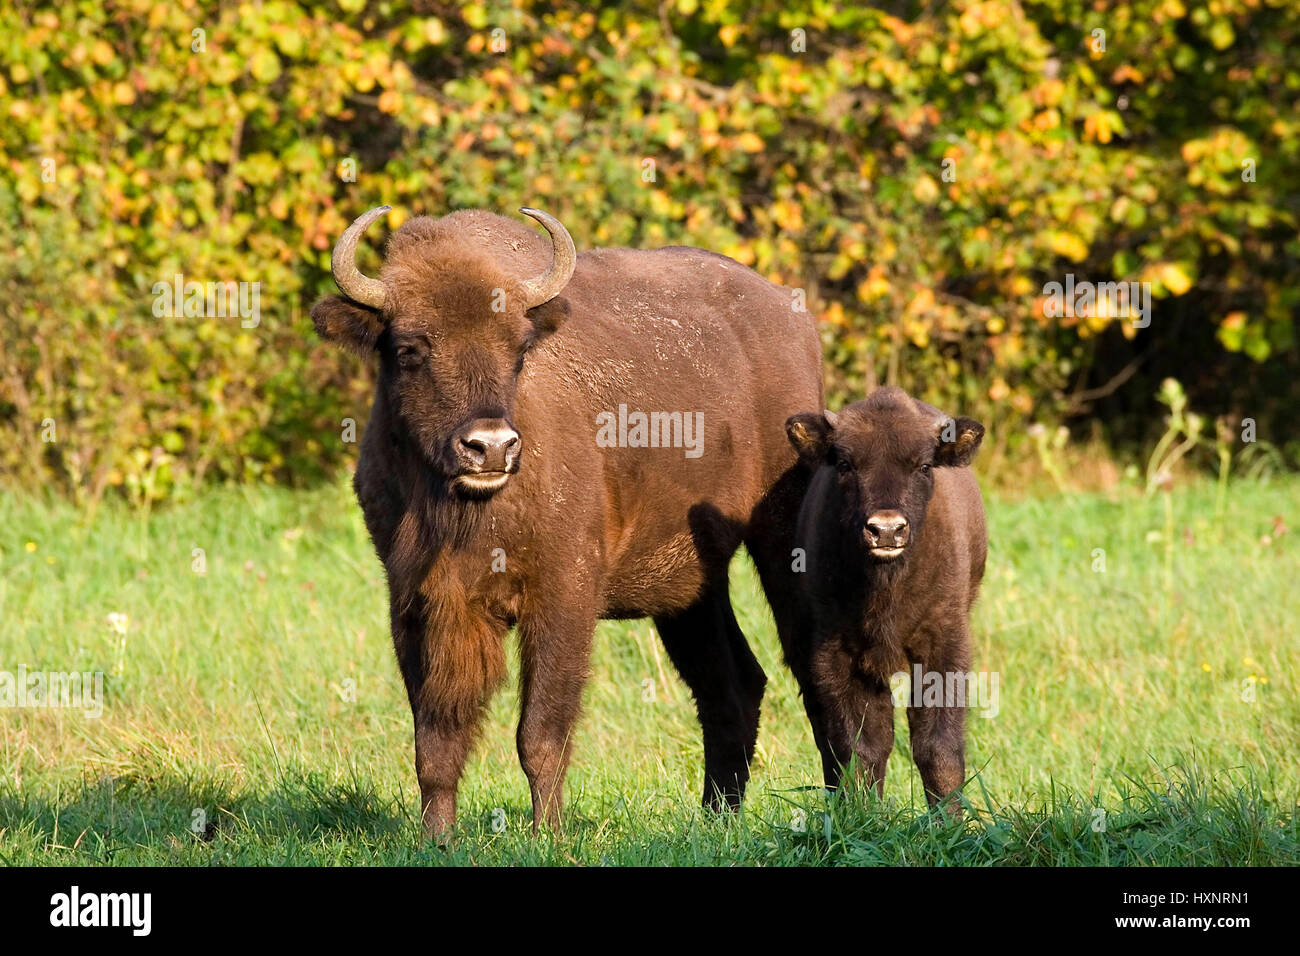 Bison Kuh mit Kalb, Masuren, Pole, Wisent Kuh Mit Kalb, Masuren, Polen Stockfoto